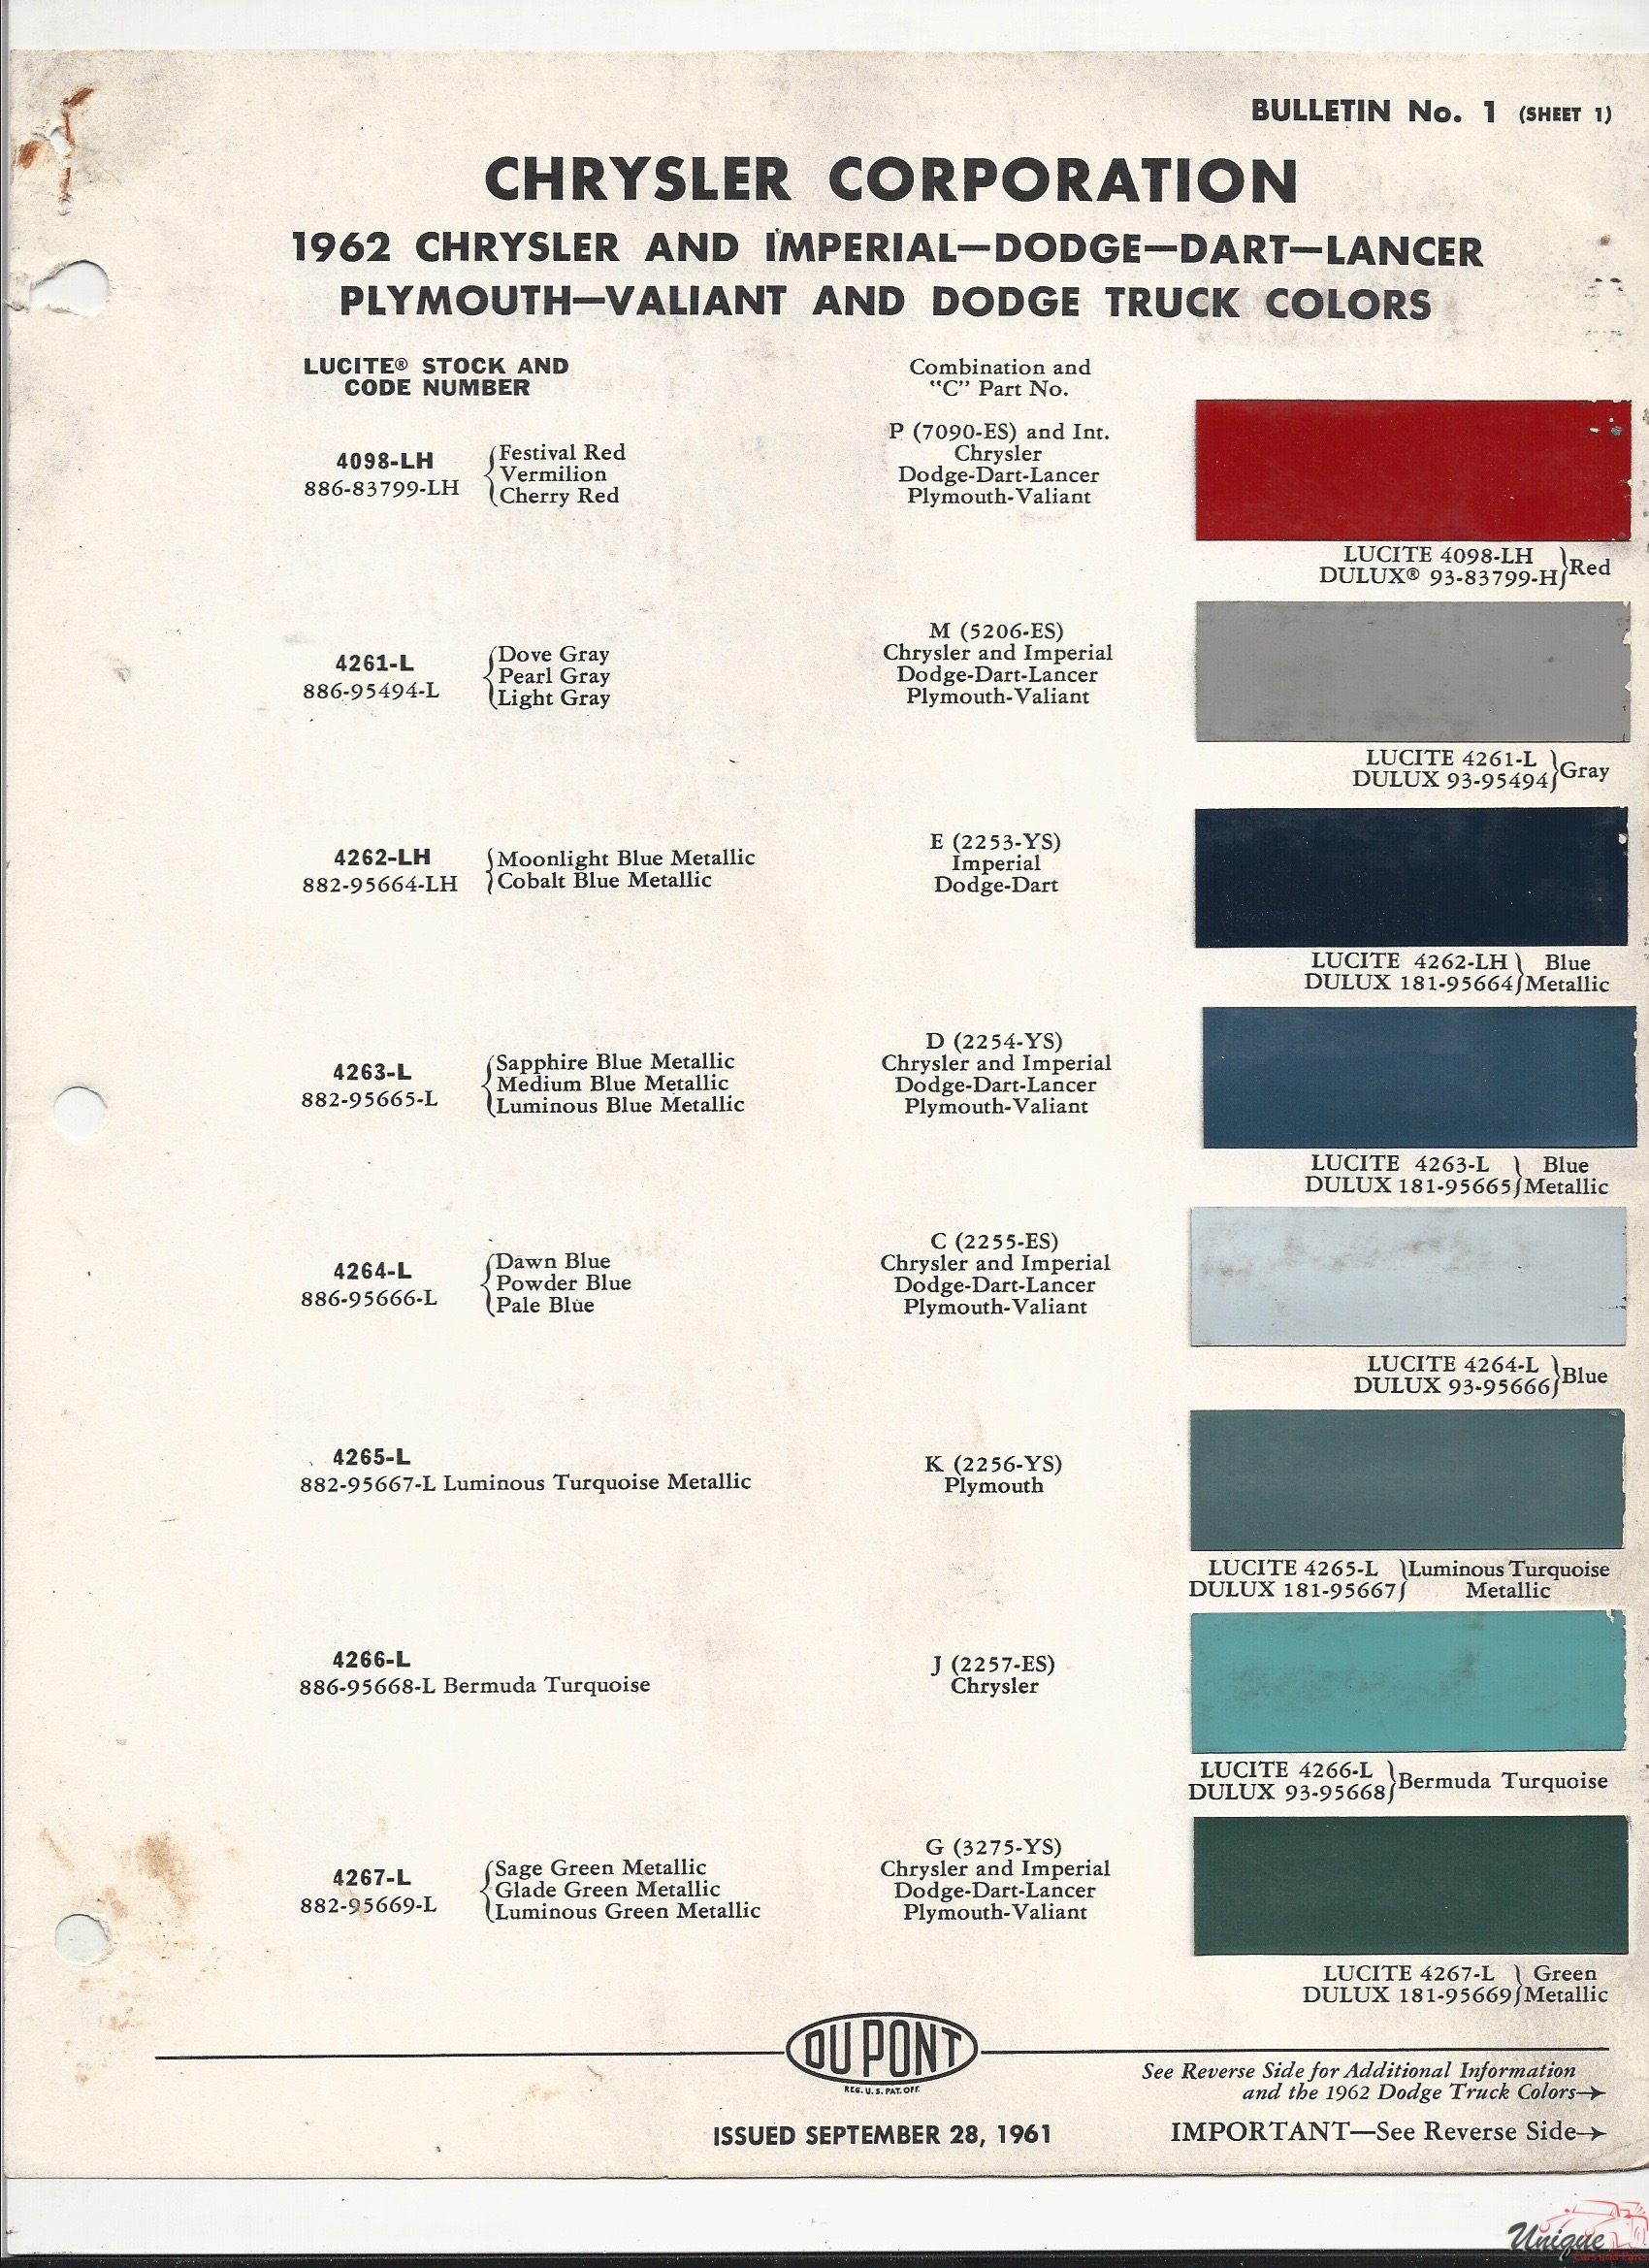 1962 Chrysler Paint Charts